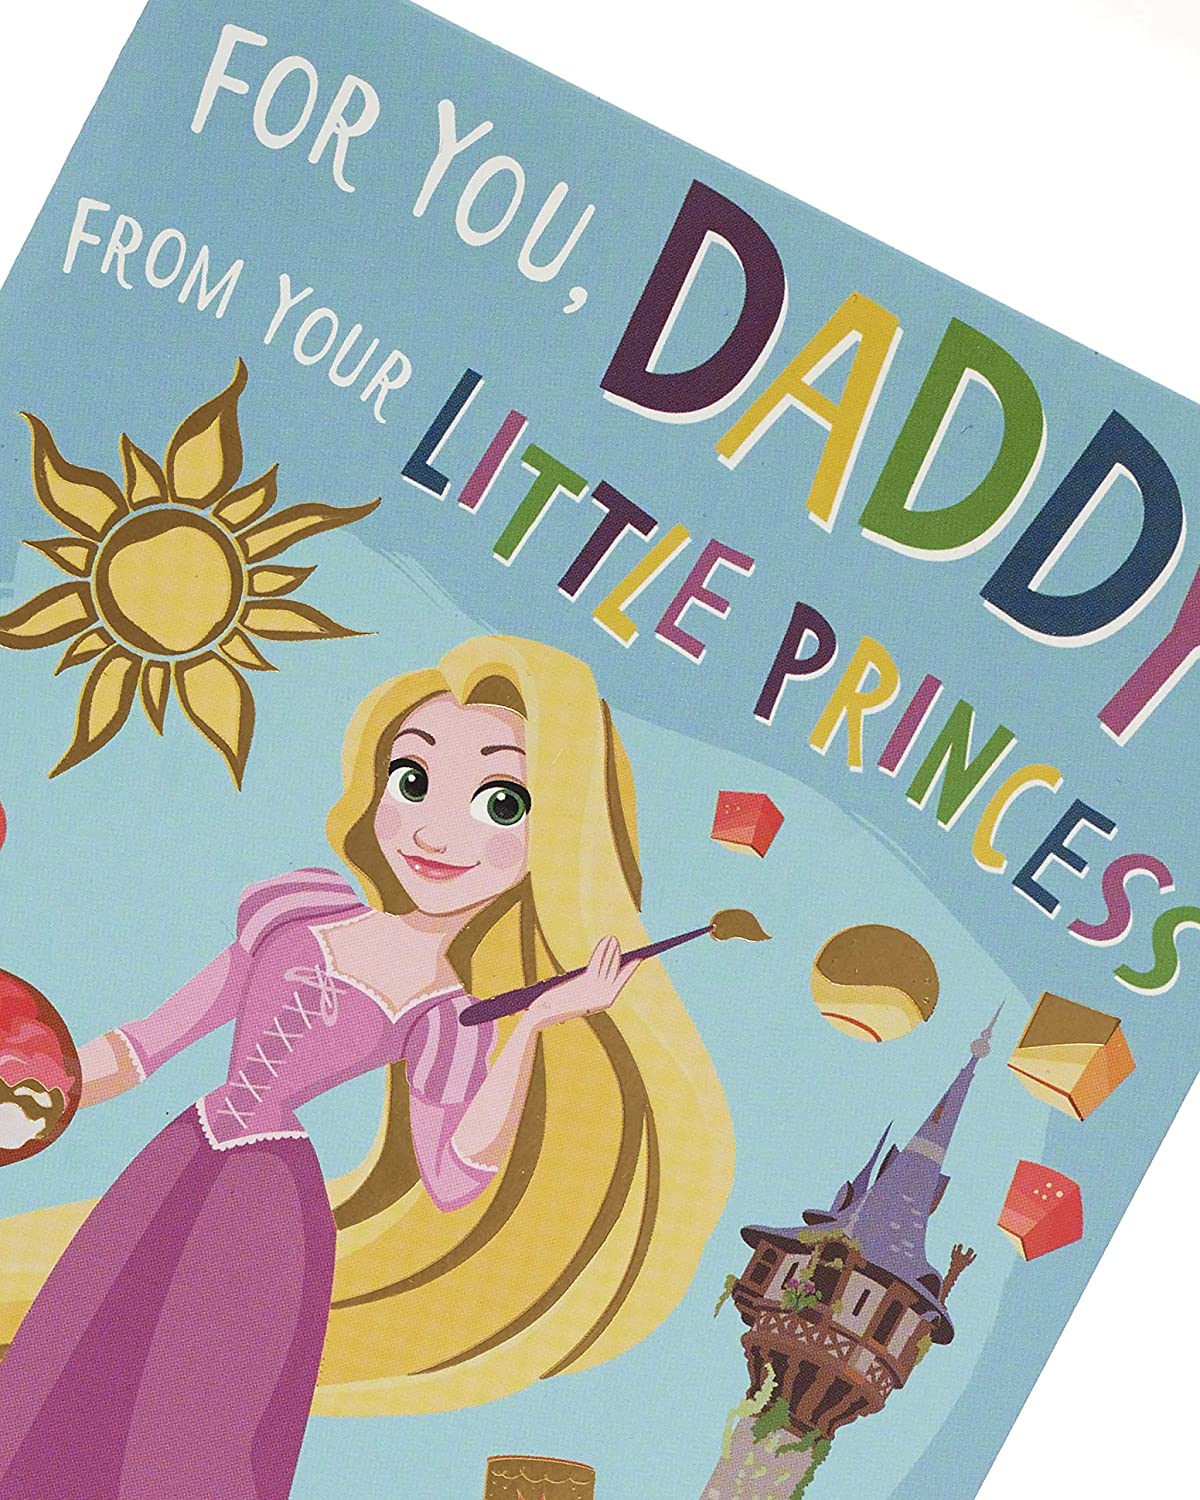 Daddy Birthday Card - Disney Princess Card From Daughter